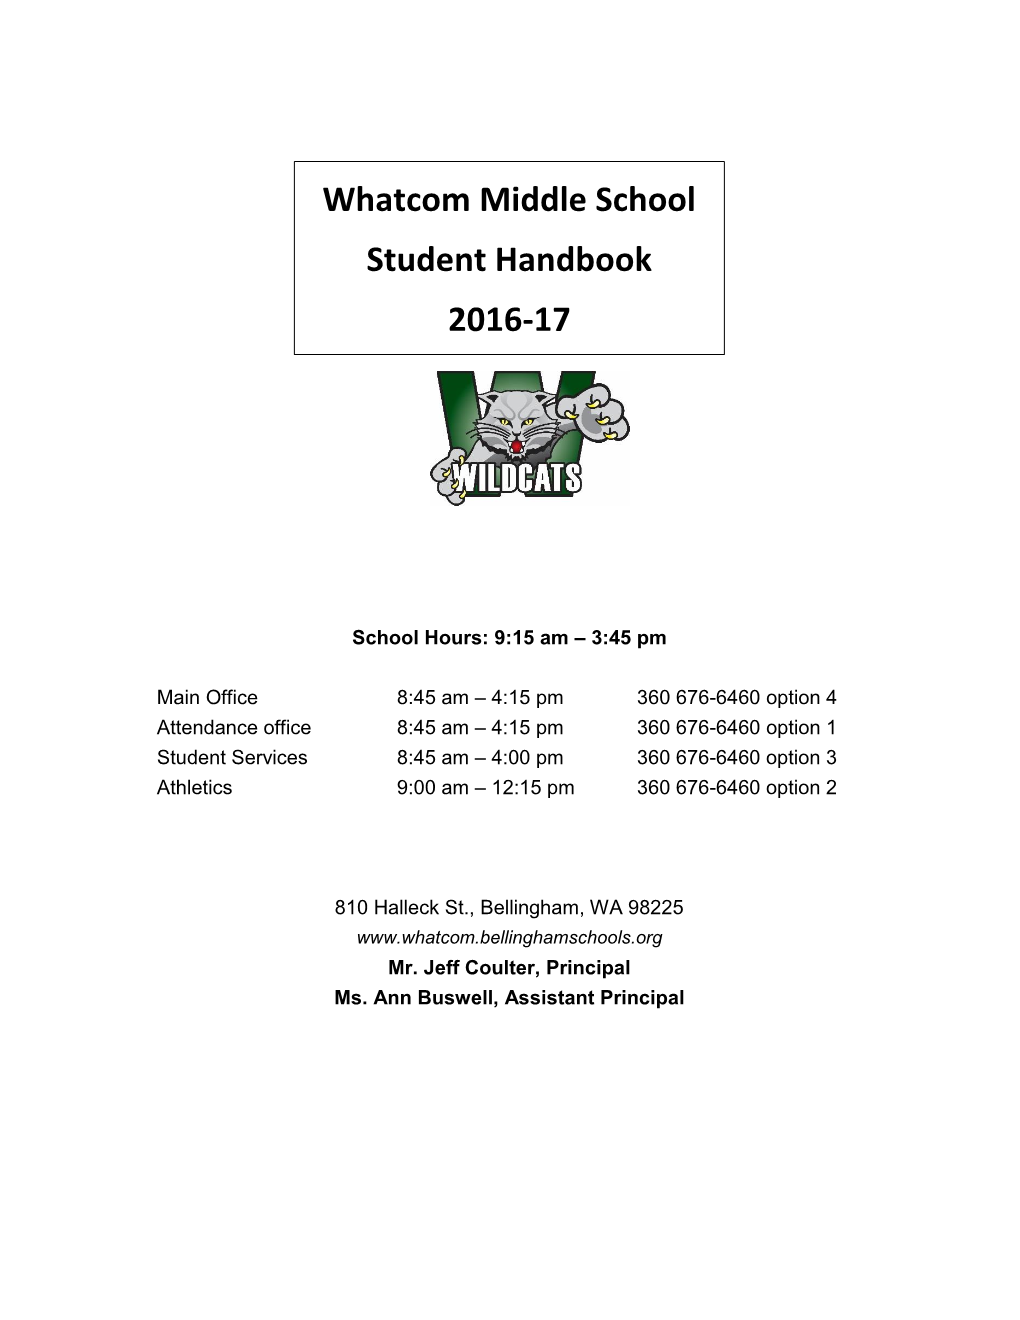 Whatcom Middle School Student Handbook 2016-17